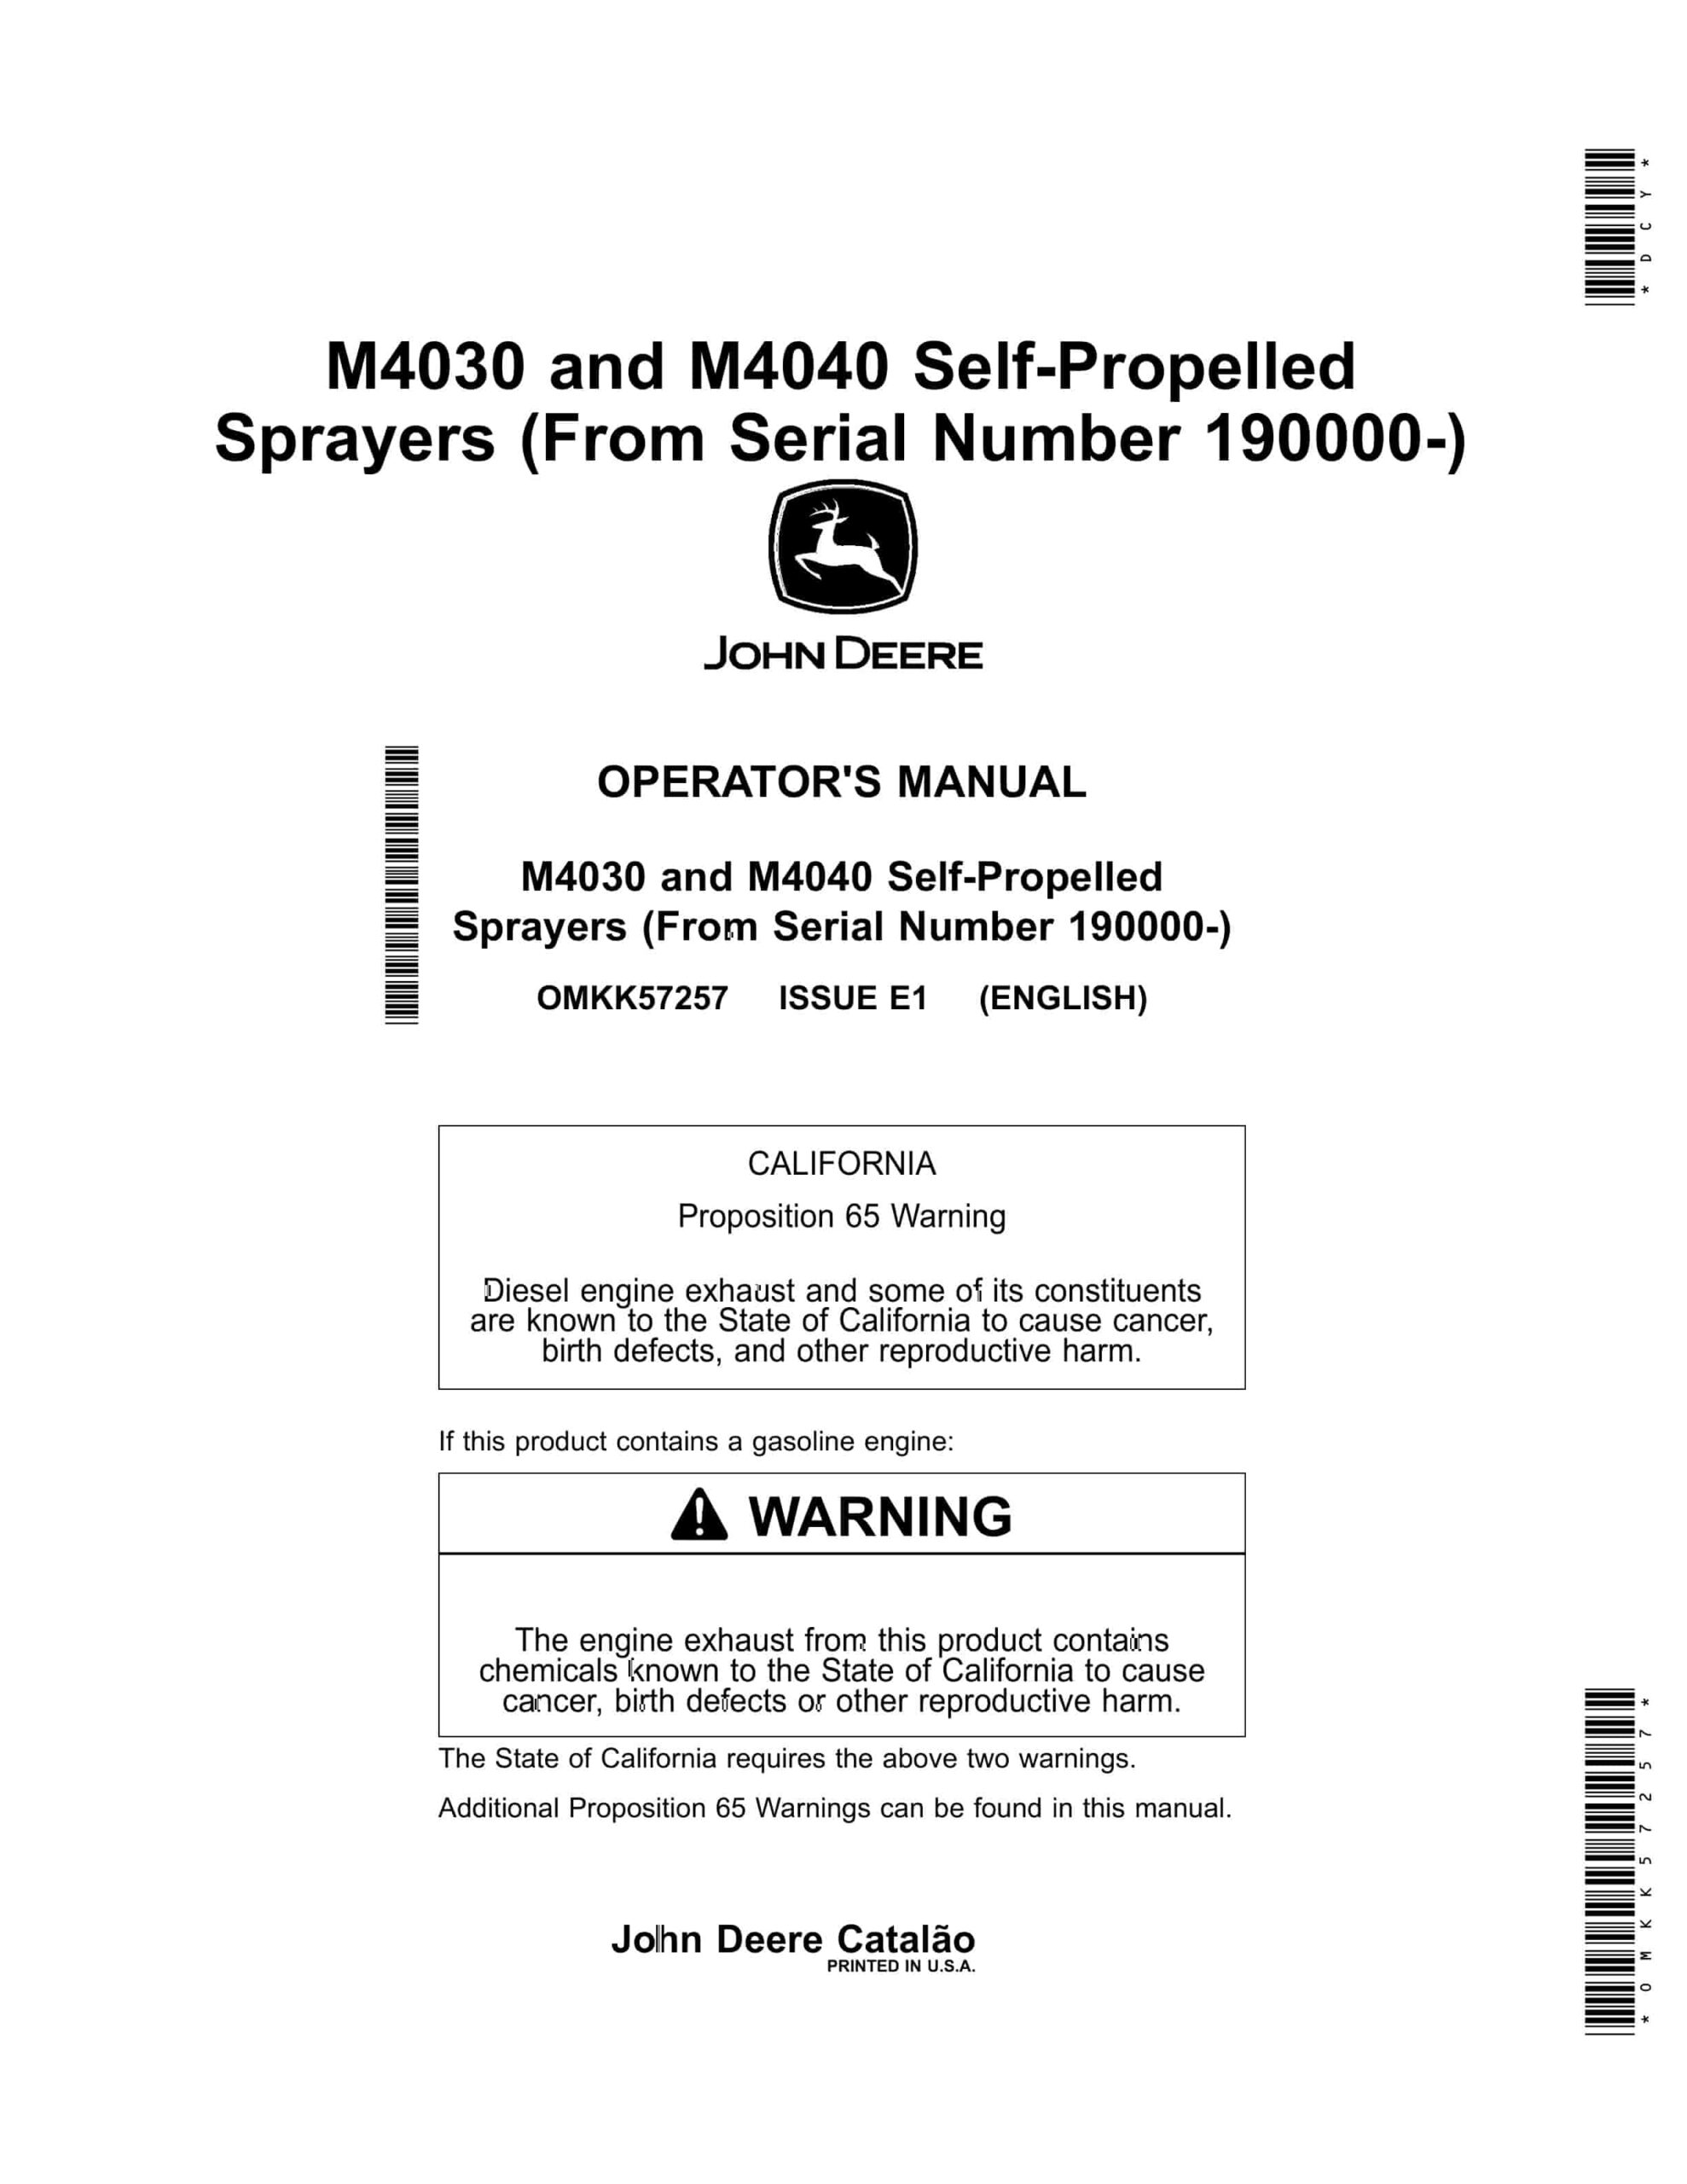 John Deere M4030 and M4040 Self-Propelled Sprayer Operator Manual OMKK57257-1